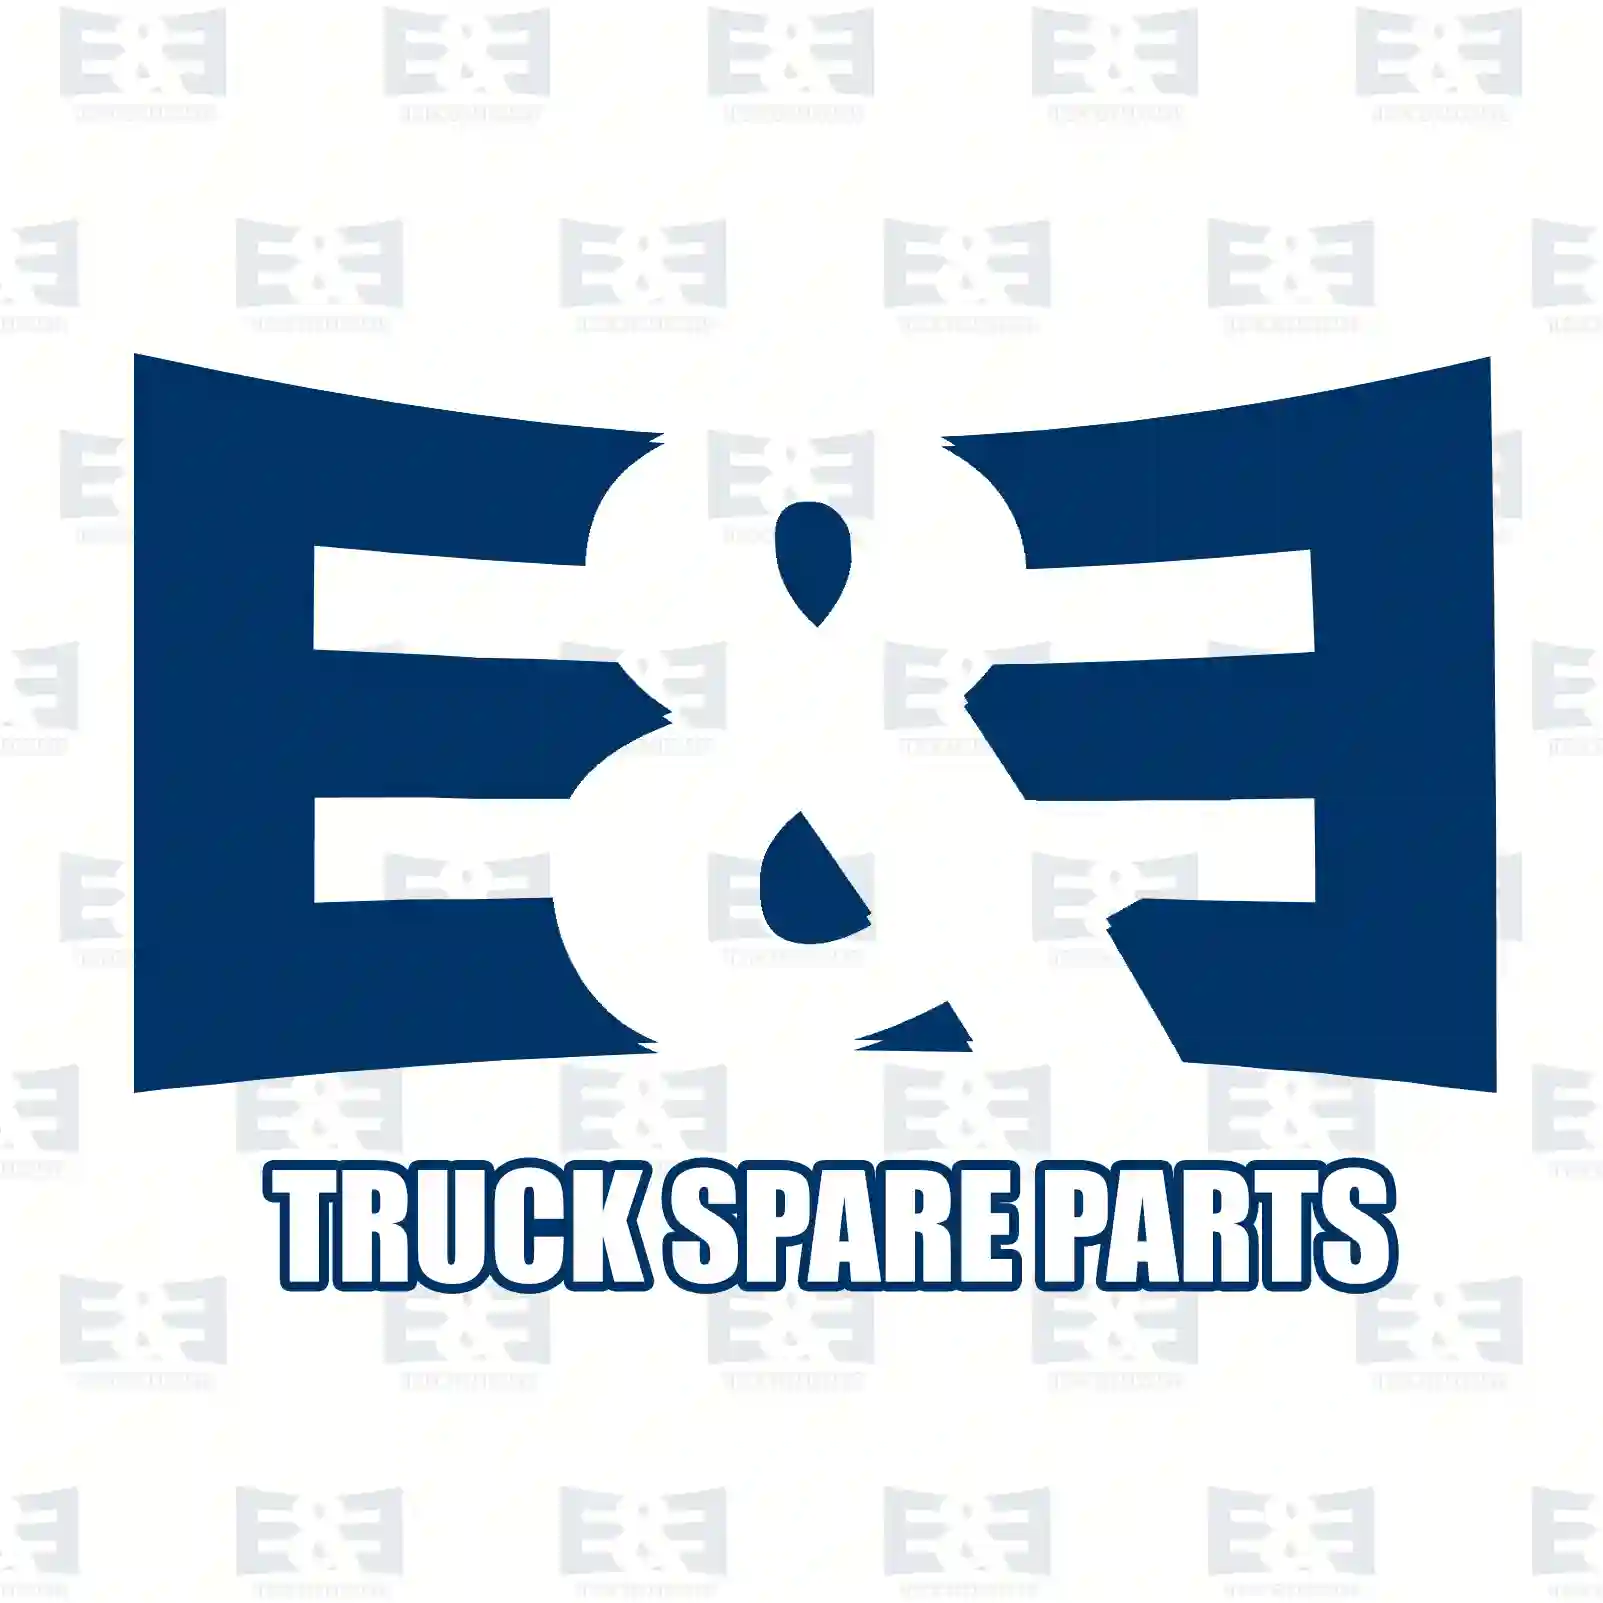 Suspension Buffer stop, EE No 2E2283632 ,  oem no:3753250144, 9673250044, 9703250044, 9793250244 E&E Truck Spare Parts | Truck Spare Parts, Auotomotive Spare Parts